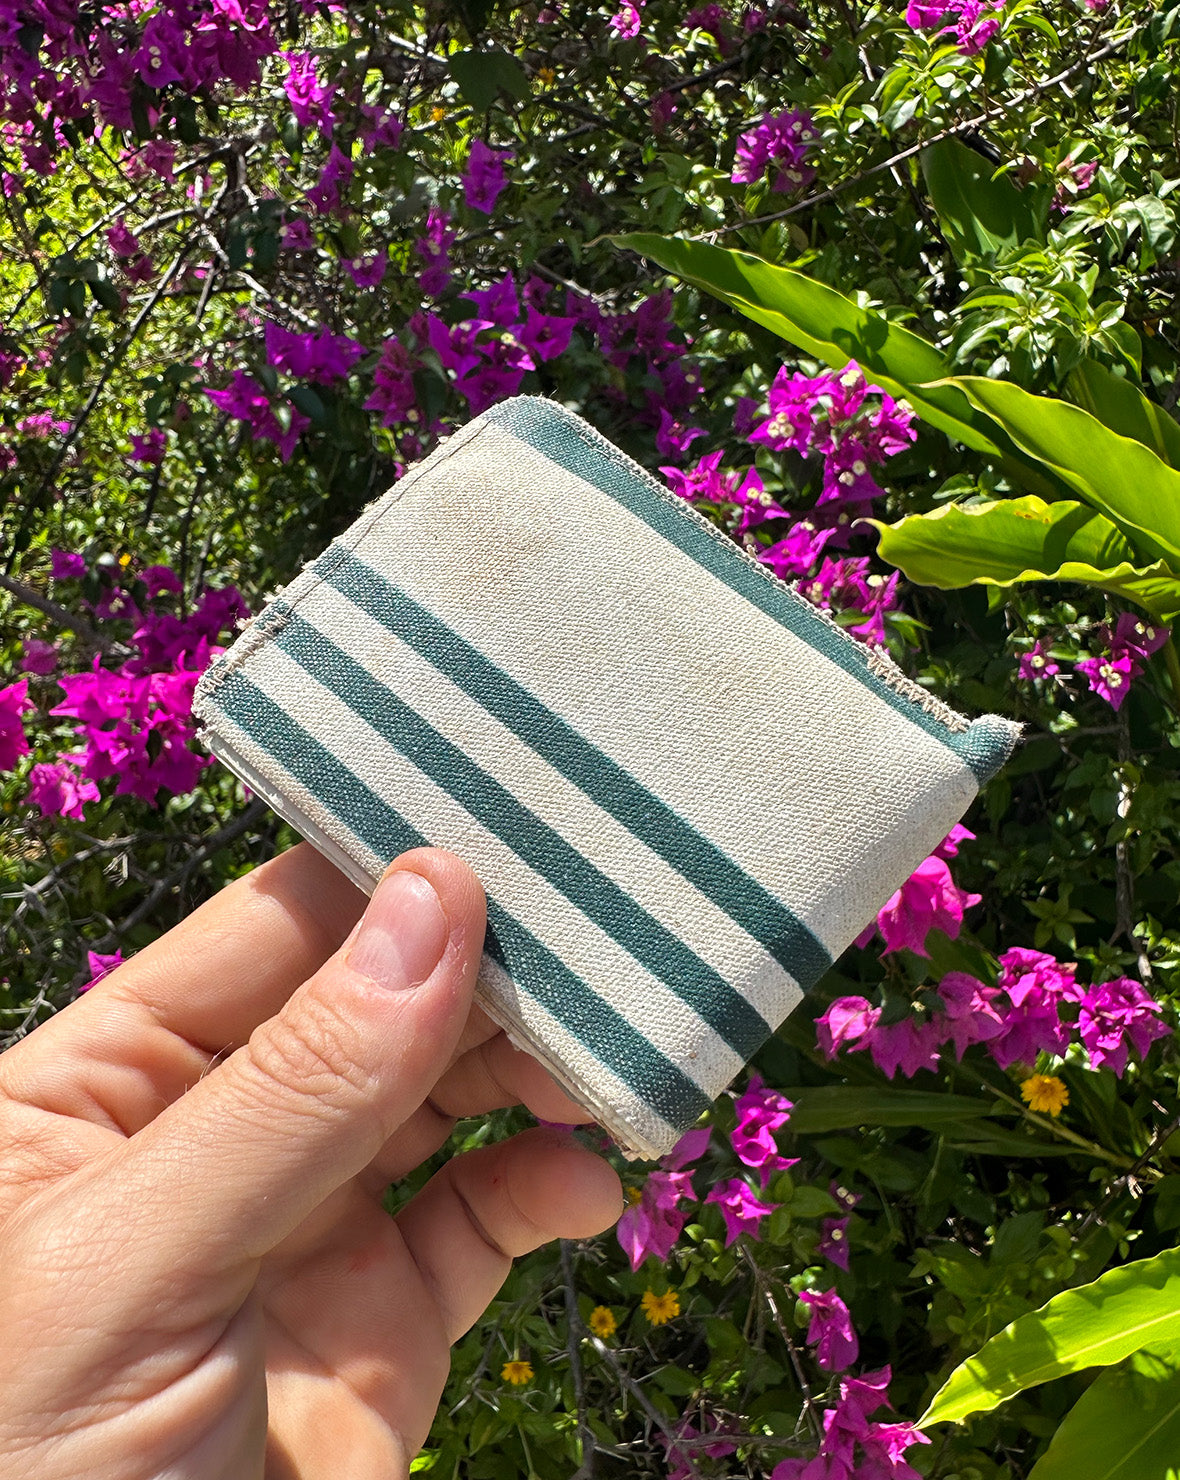 ARTIFACT No.48 Bi-Fold Wallet in Vintage Up-Cycled Awning Material: Maui, Hawaii